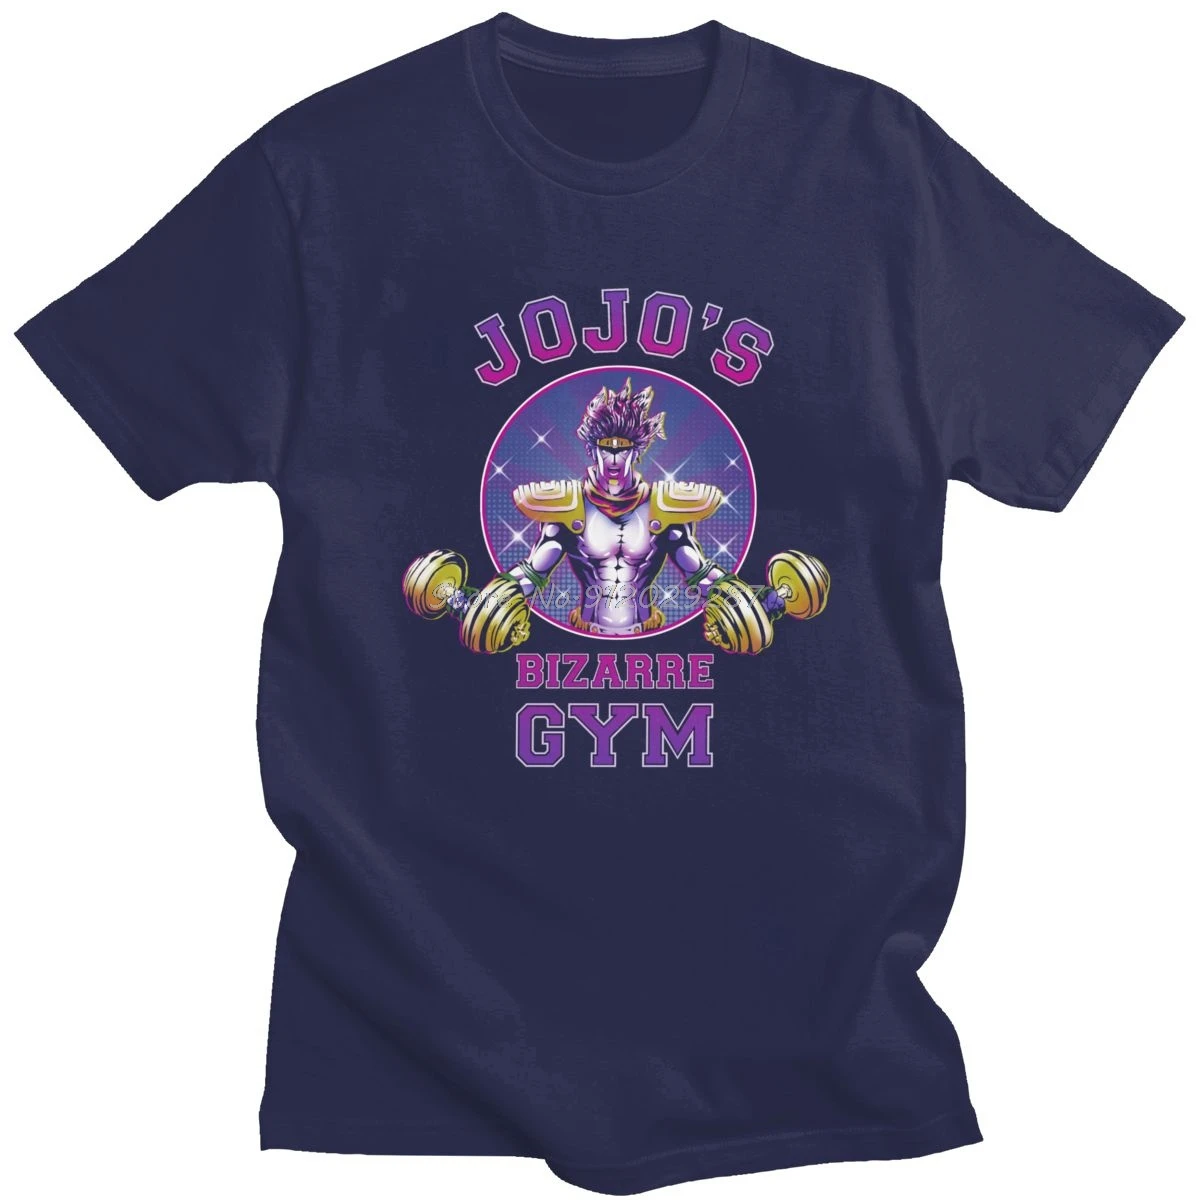 Funny Men s Jotaro Kujo Gym T Shirt Short Sleeve Cotton Graphic T Shirts Jojo Bizarre 3 - JoJo's Bizarre Adventure Shop